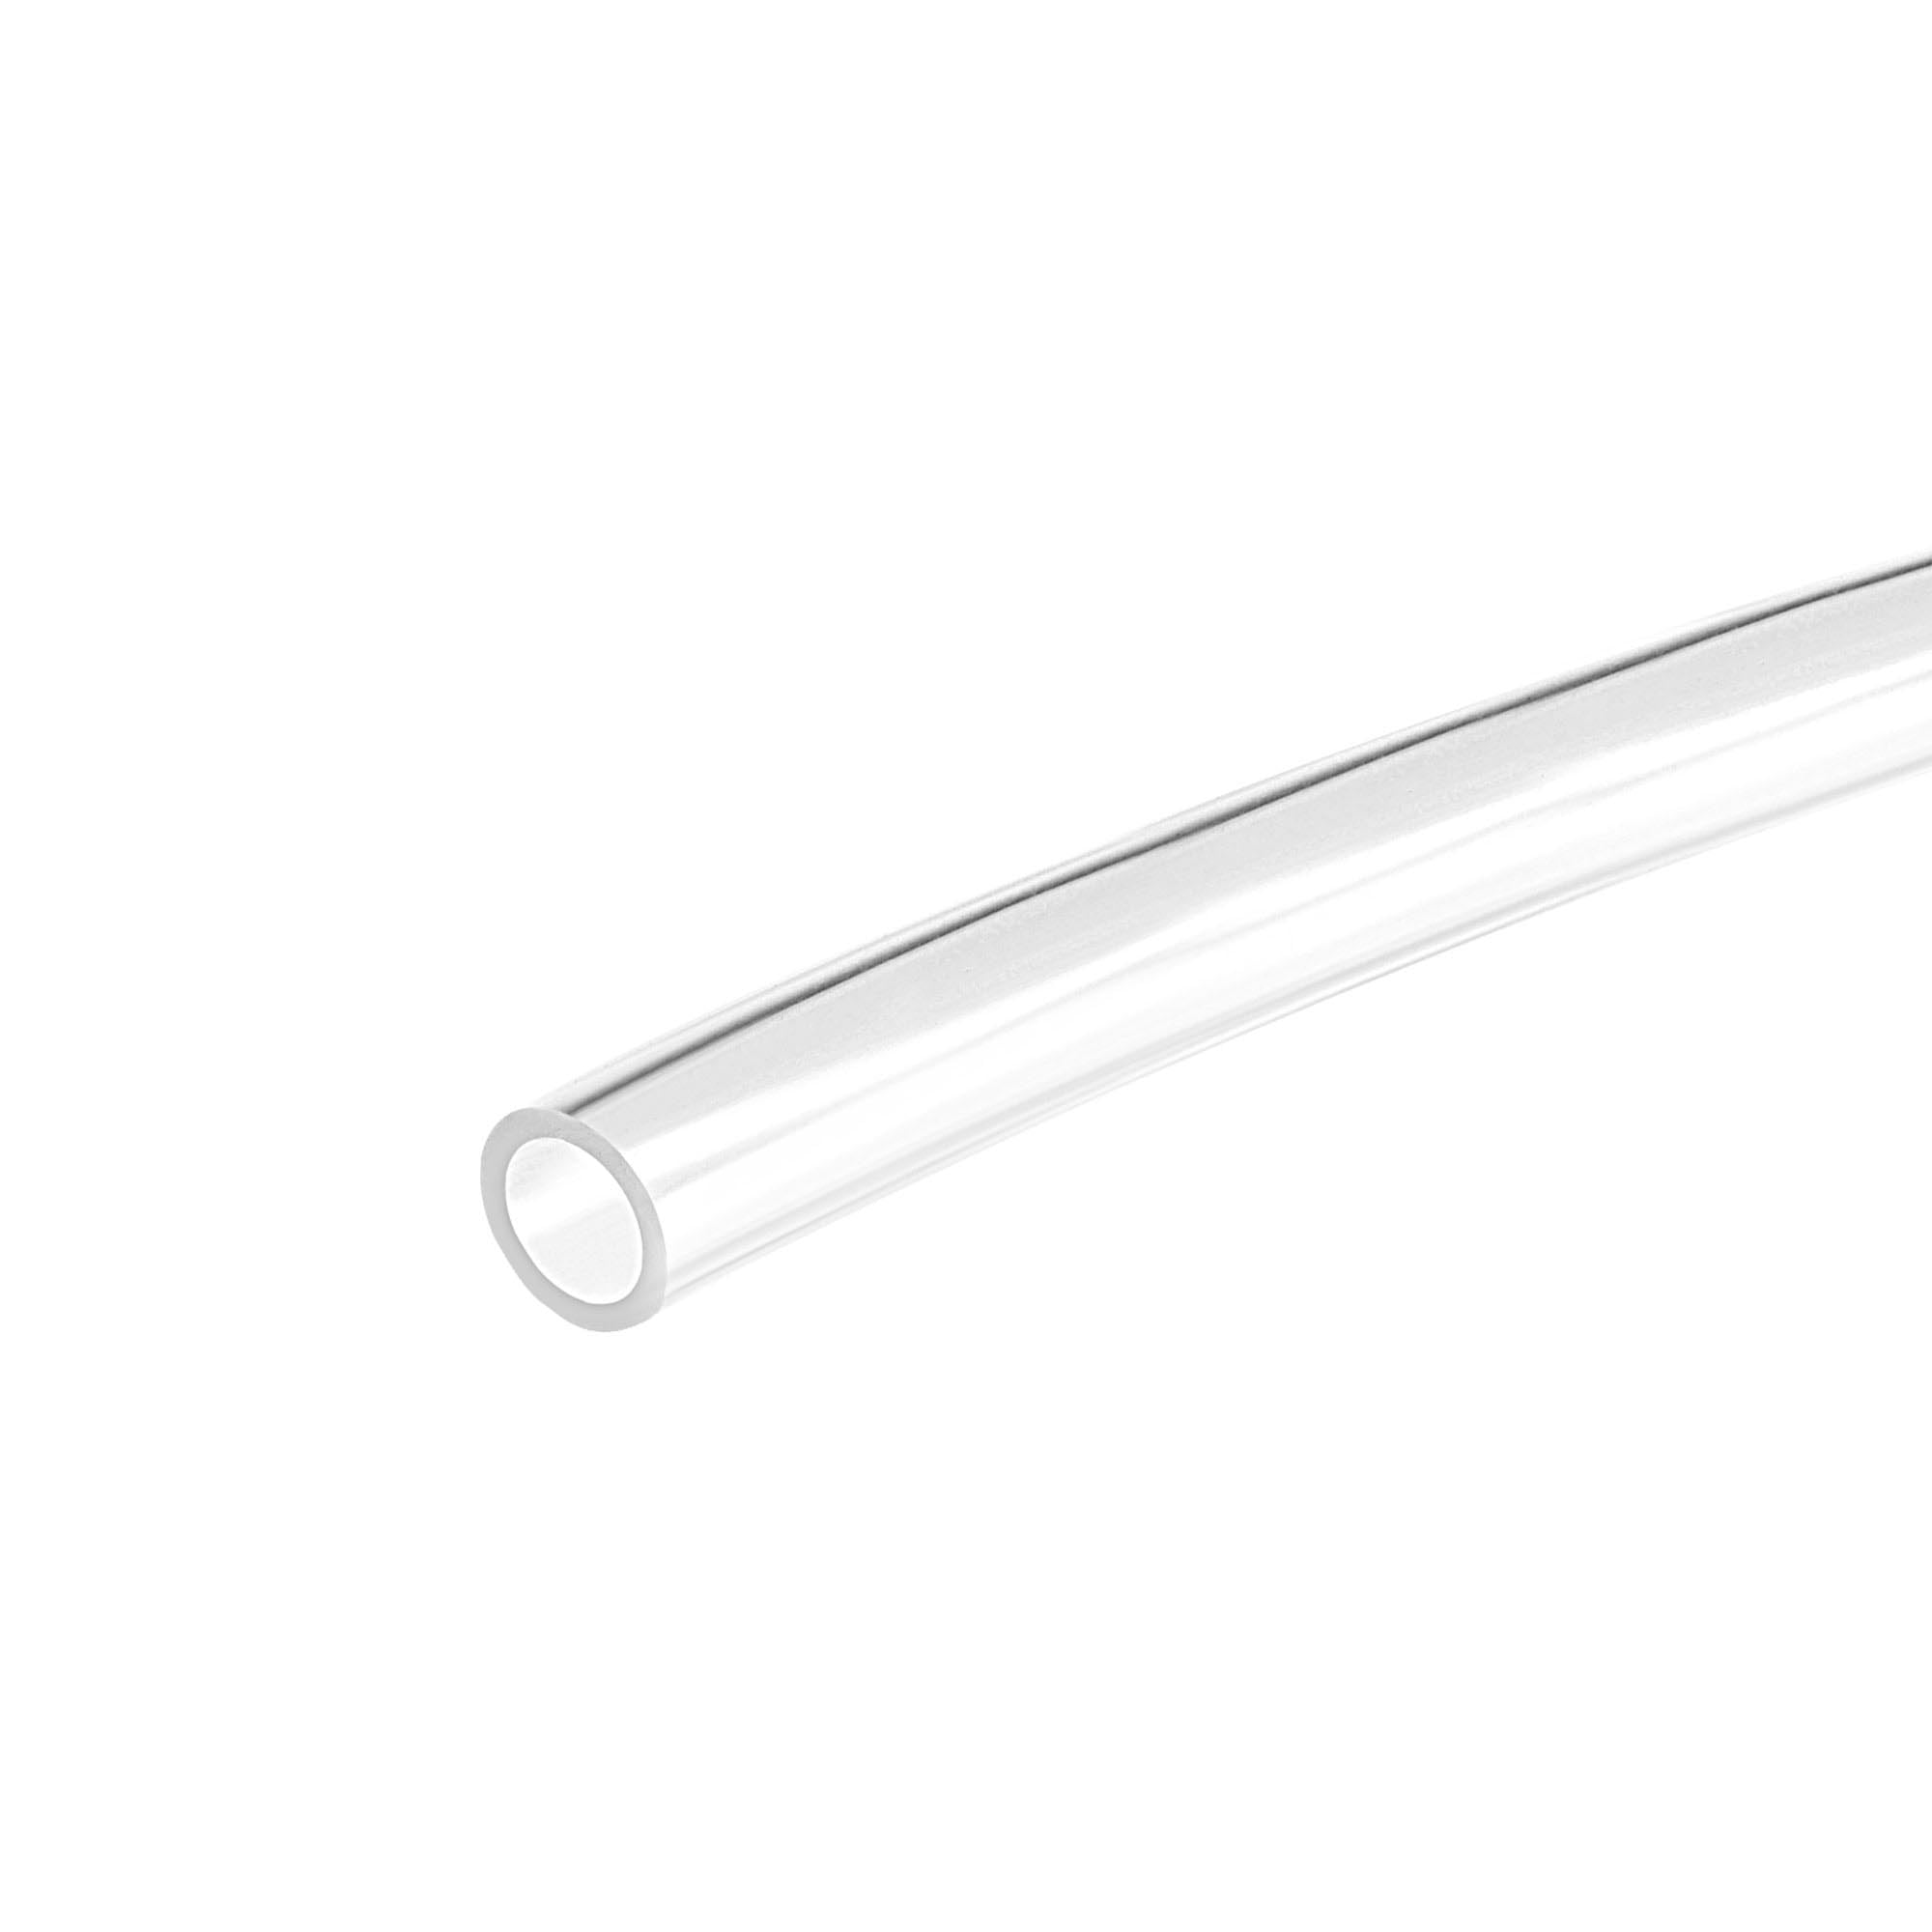 3mm x 1.5mm Wall Clear Plastic Flexible Non Toxic PVC Hose Tubing 10 Mtr 1/8" 